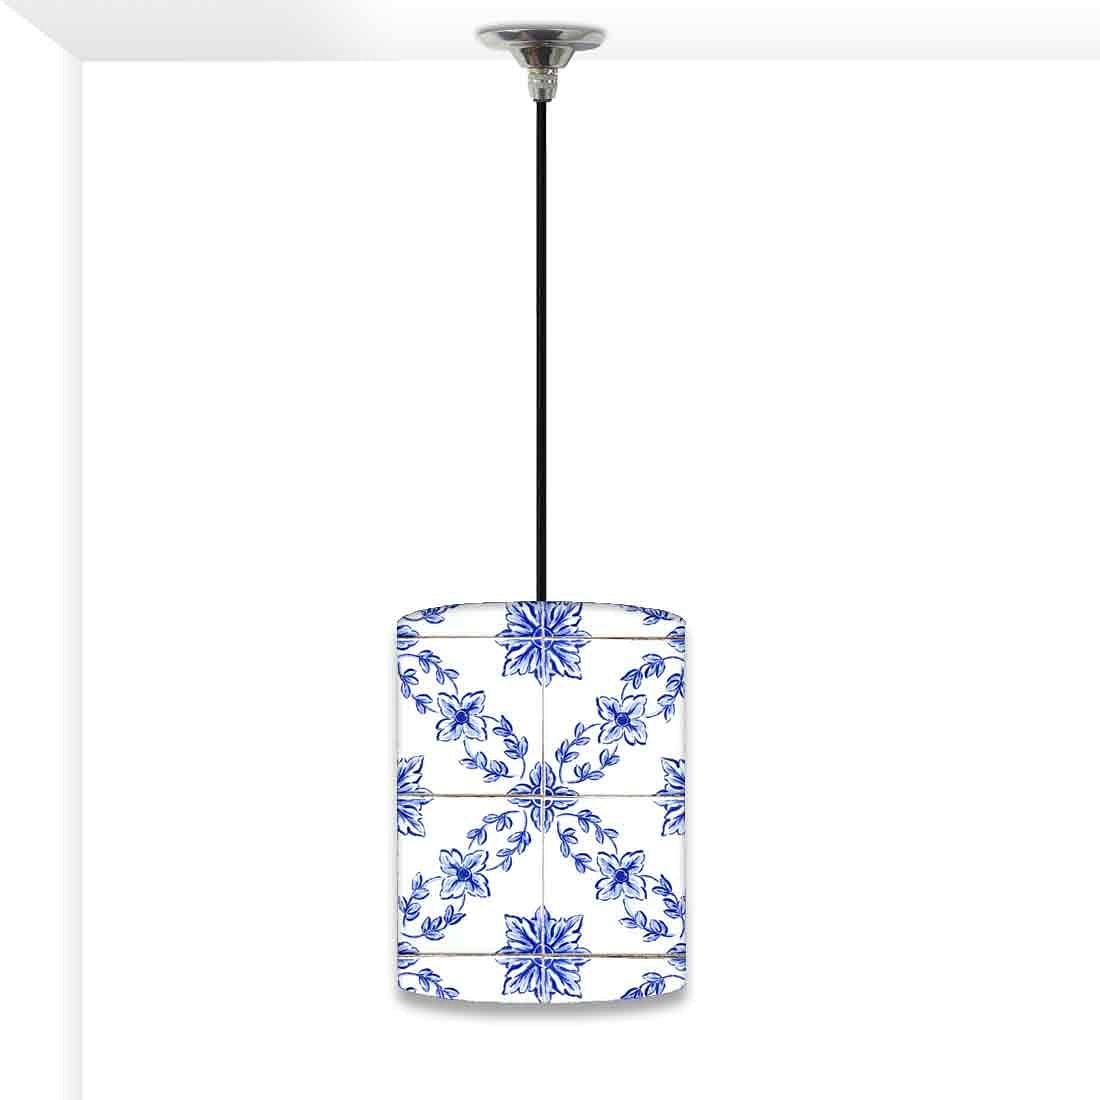 Ceiling Hanging Pendant Lamp Shade - Pattern Spanish Tiles Nutcase